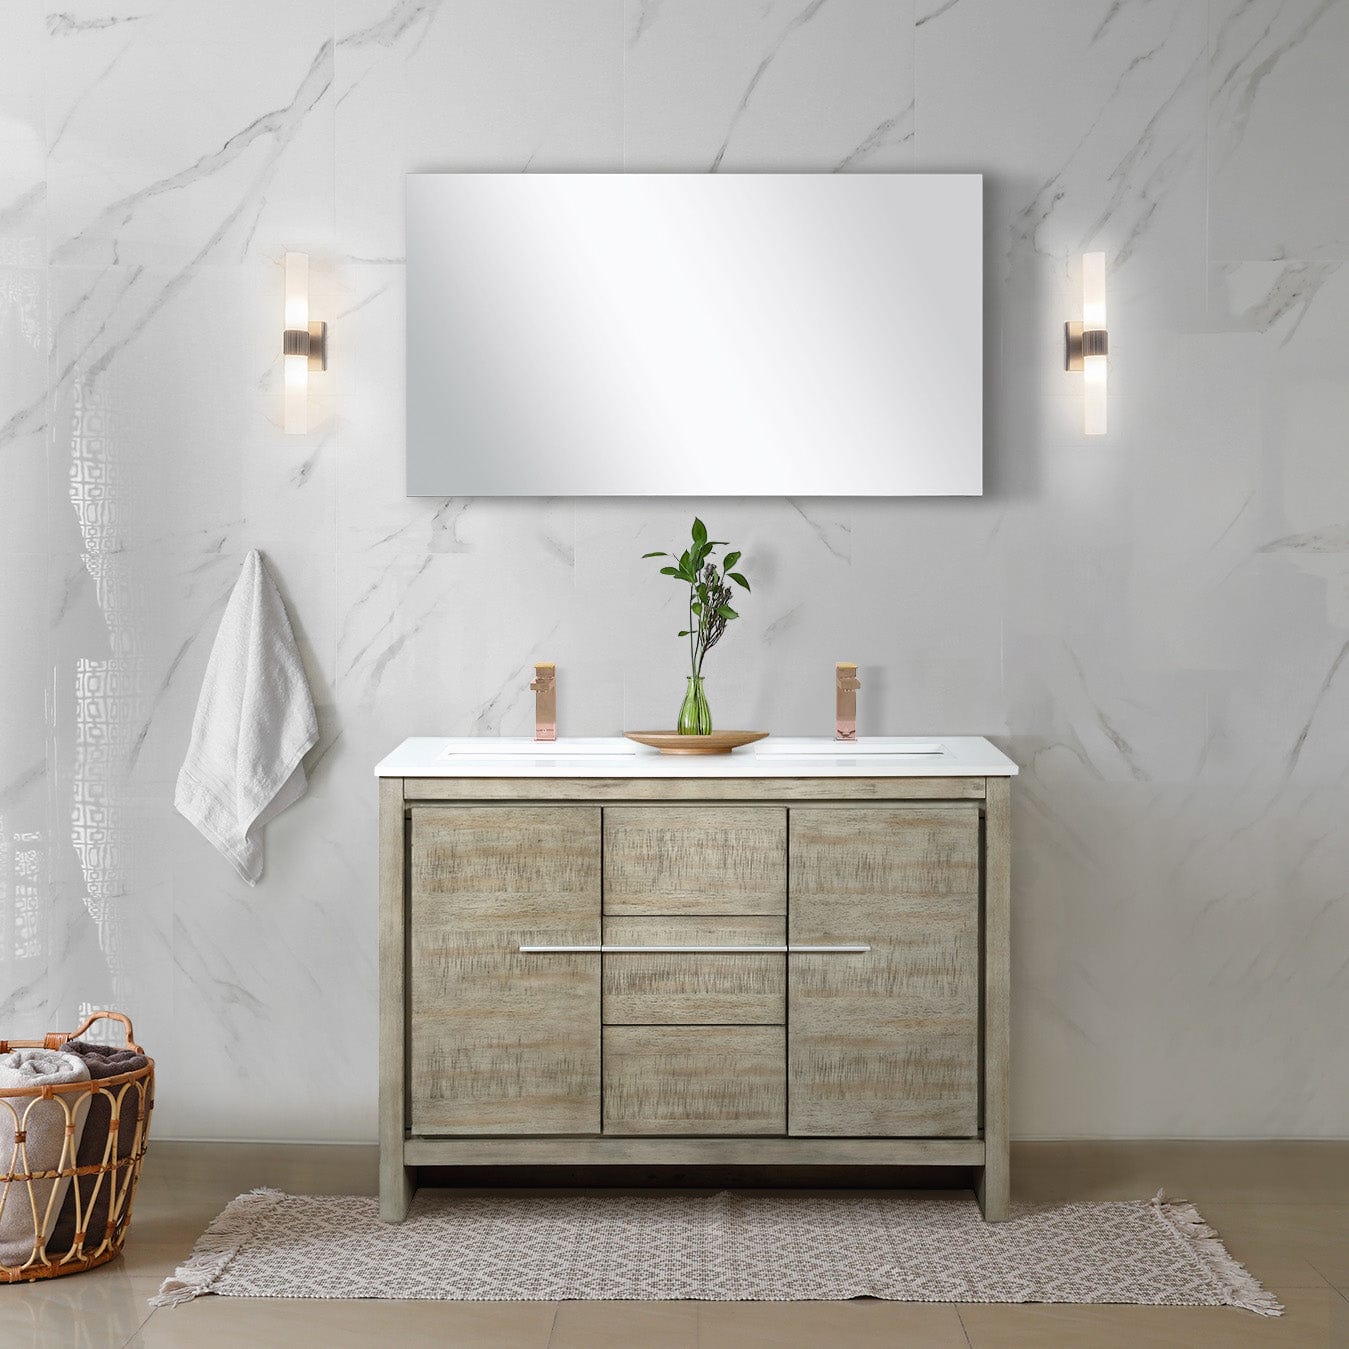 Lexora Bathroom Vanity Cultured Marble / Rose Gold Faucet / No Mirror Lafarre 48" Rustic Acacia Double Bathroom Vanity